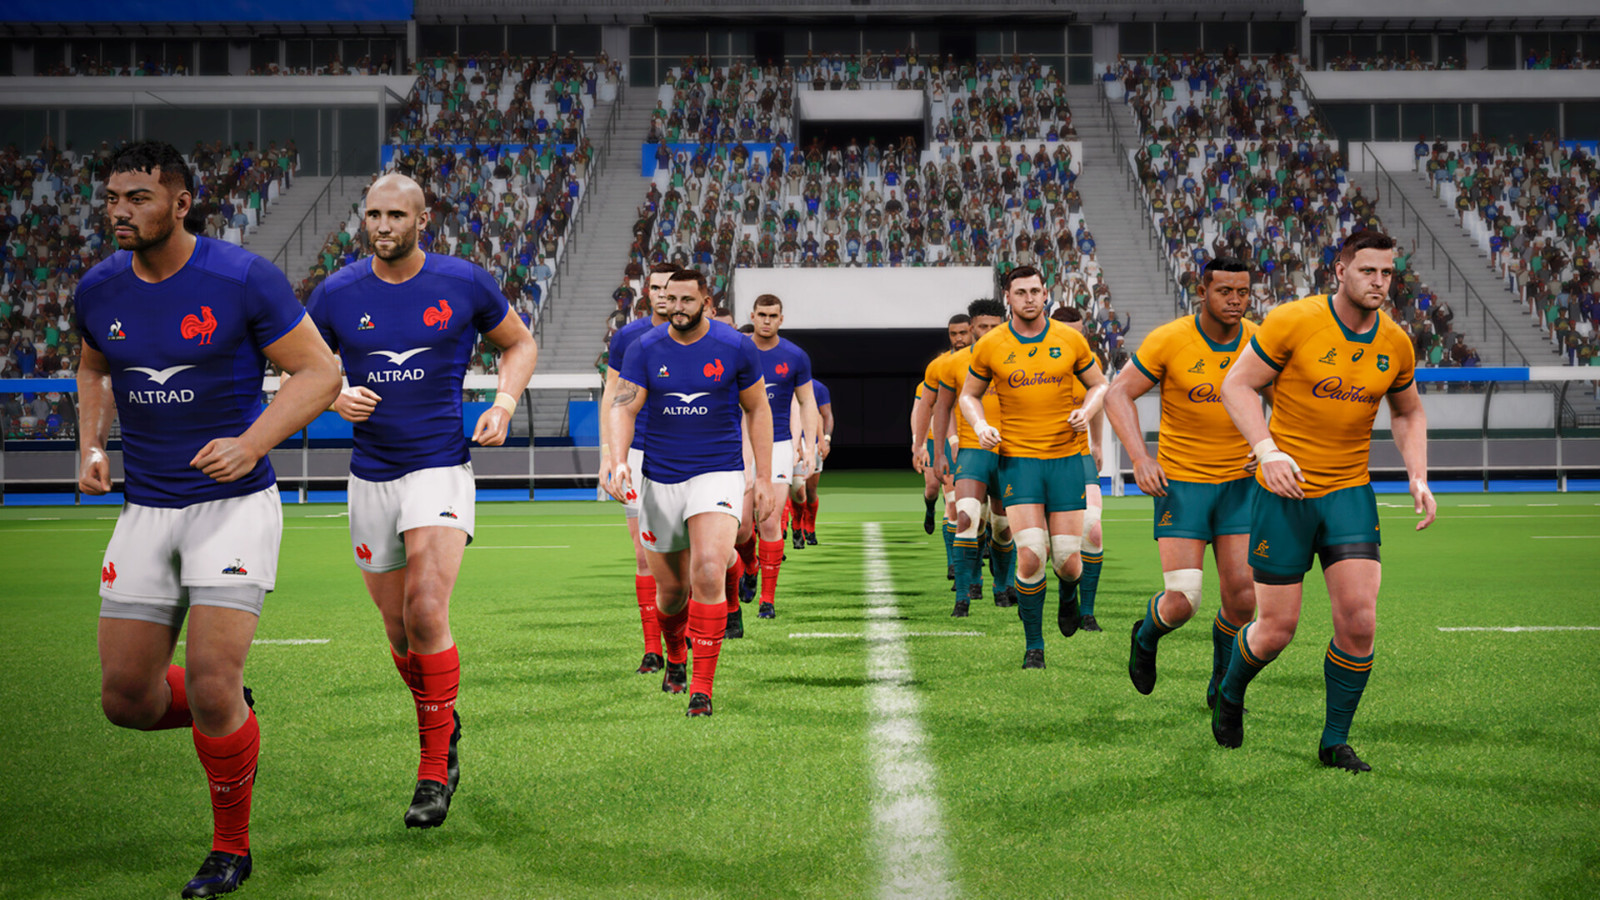 《Rugby 25》Steam页面上线 国区售价233元